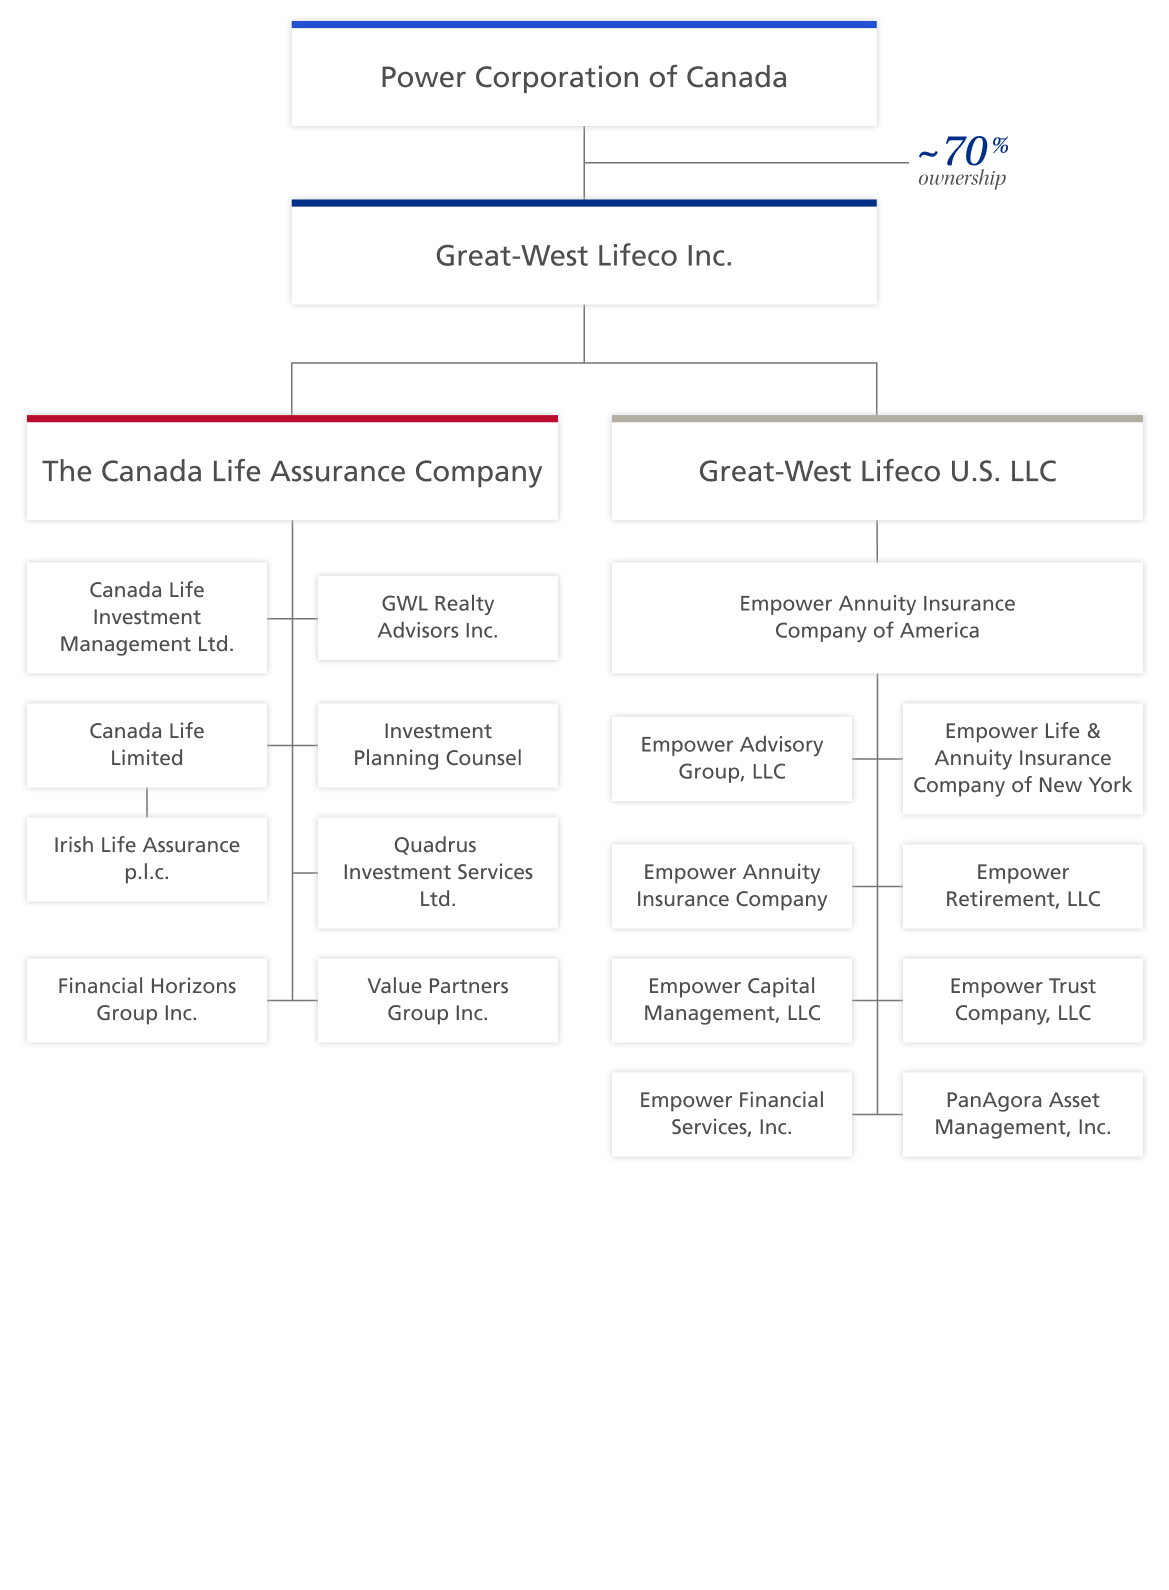 Great-West Lifeco organizational chart